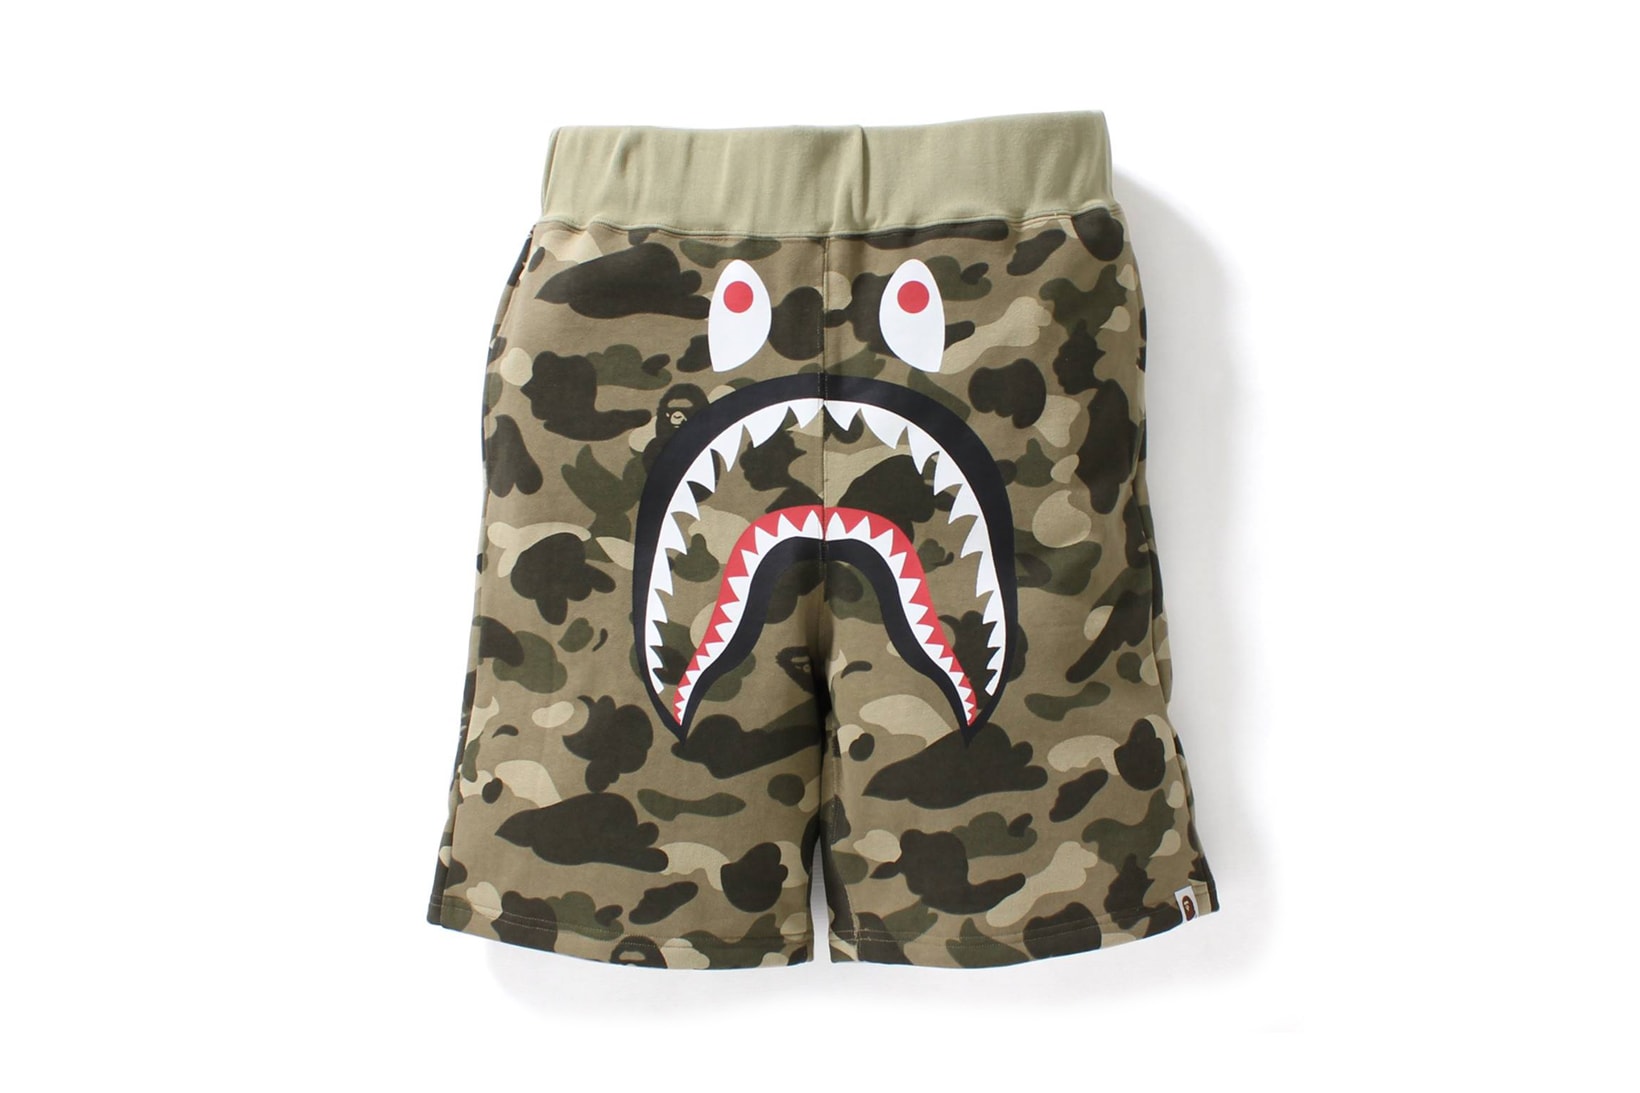 BAPE 1ST CAMO Shark Sweat Shorts Streetwear Fashion Clothing Bottoms Camo Blue Red Multi Color